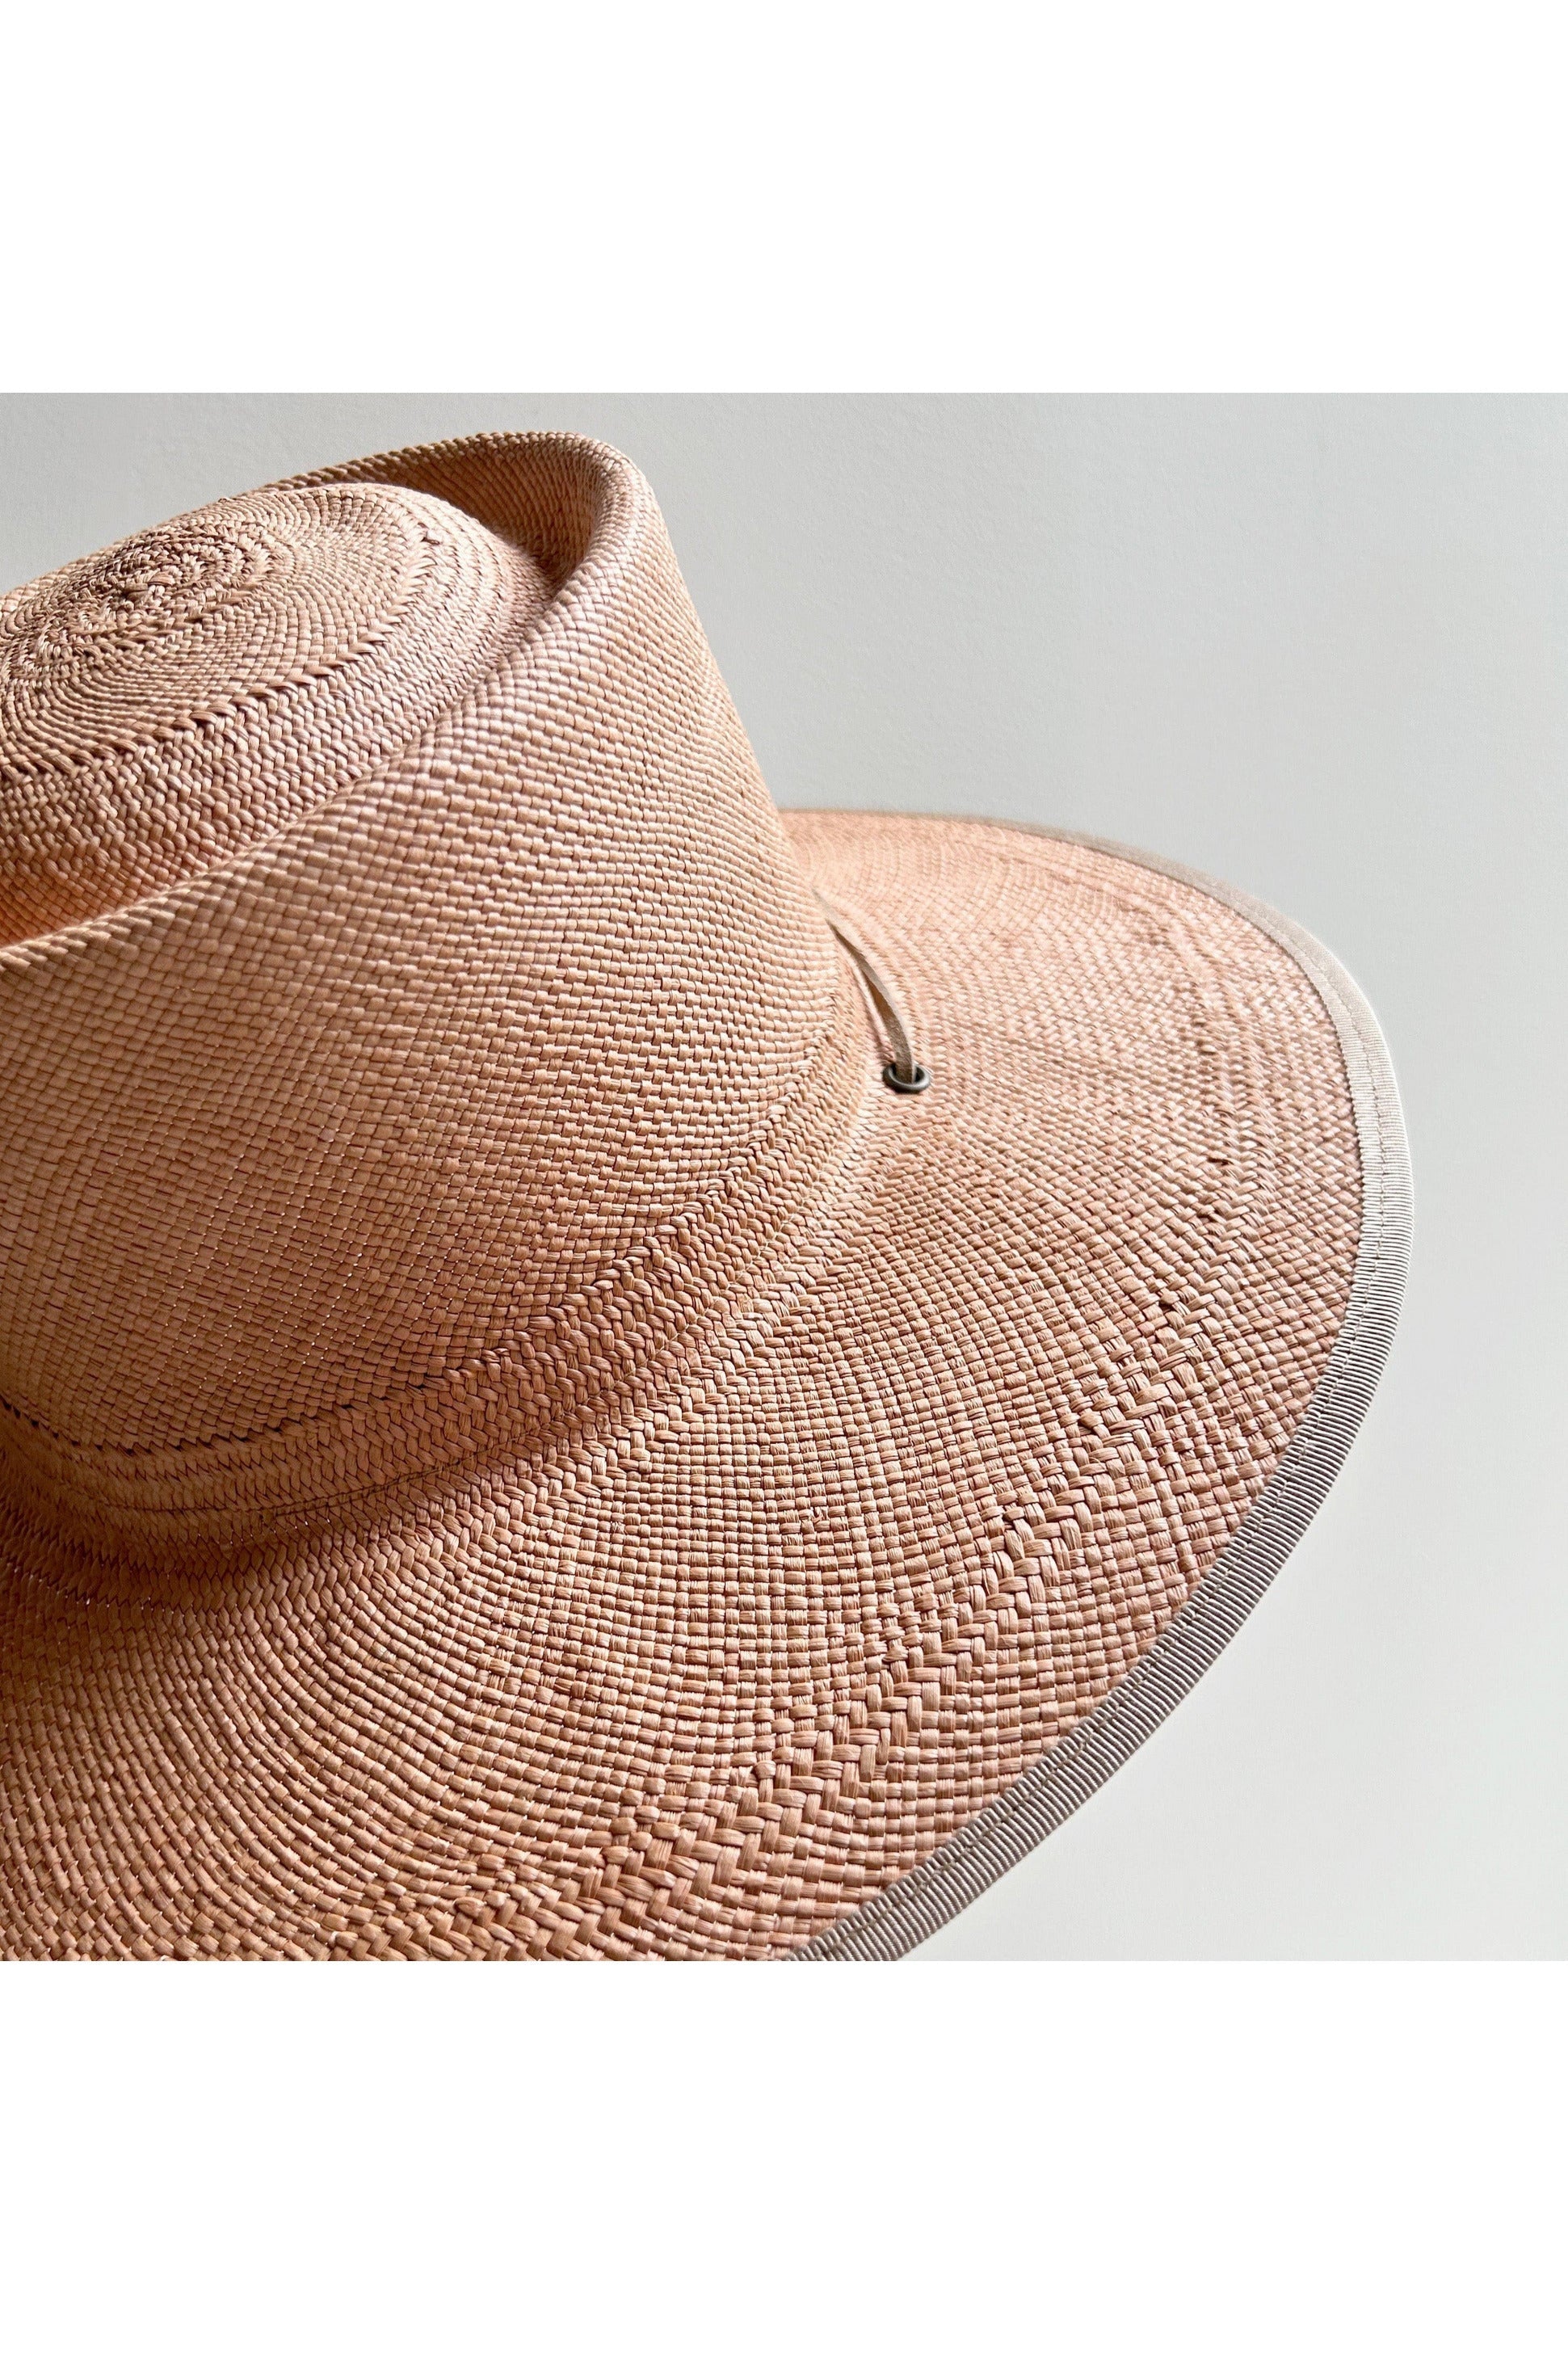 Alderman Sun Hat in Panama Straw Accessories Brookes Boswell   